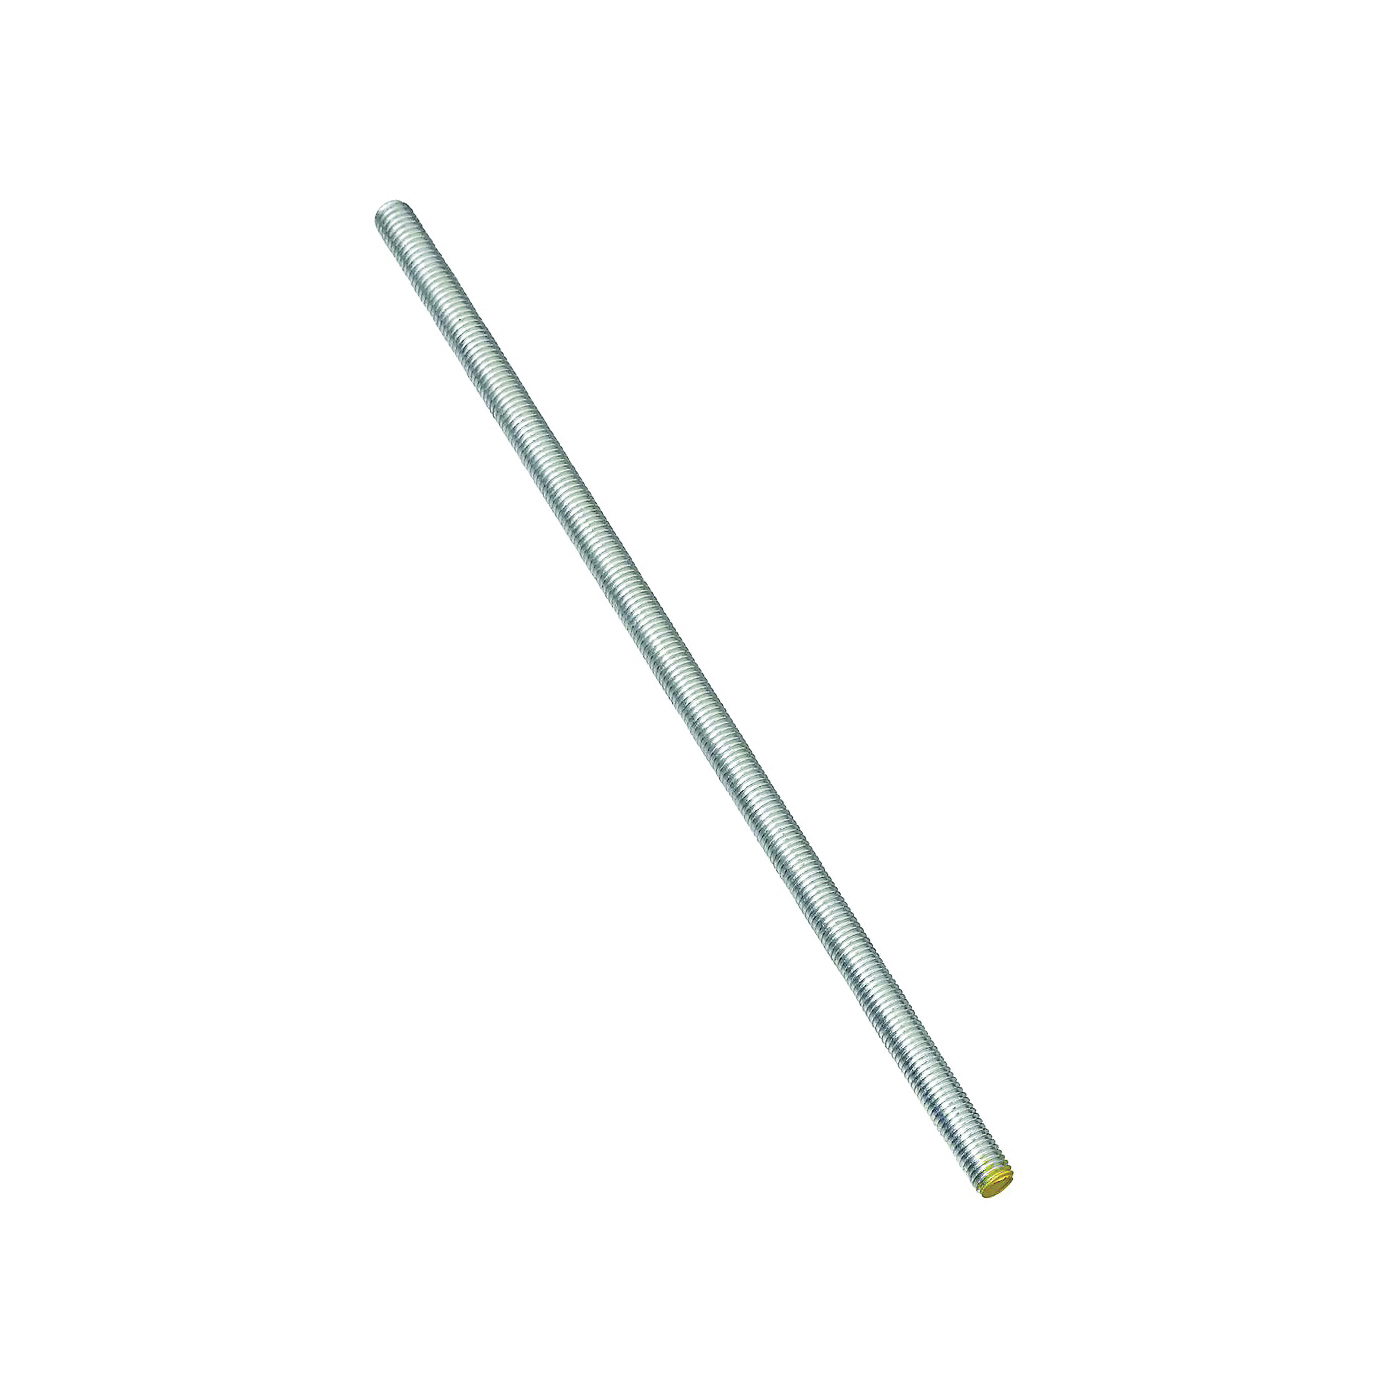 N179-432 Threaded Rod, 3/8-16 Thread, 24 in L, A Grade, Steel, Zinc, UNC Thread